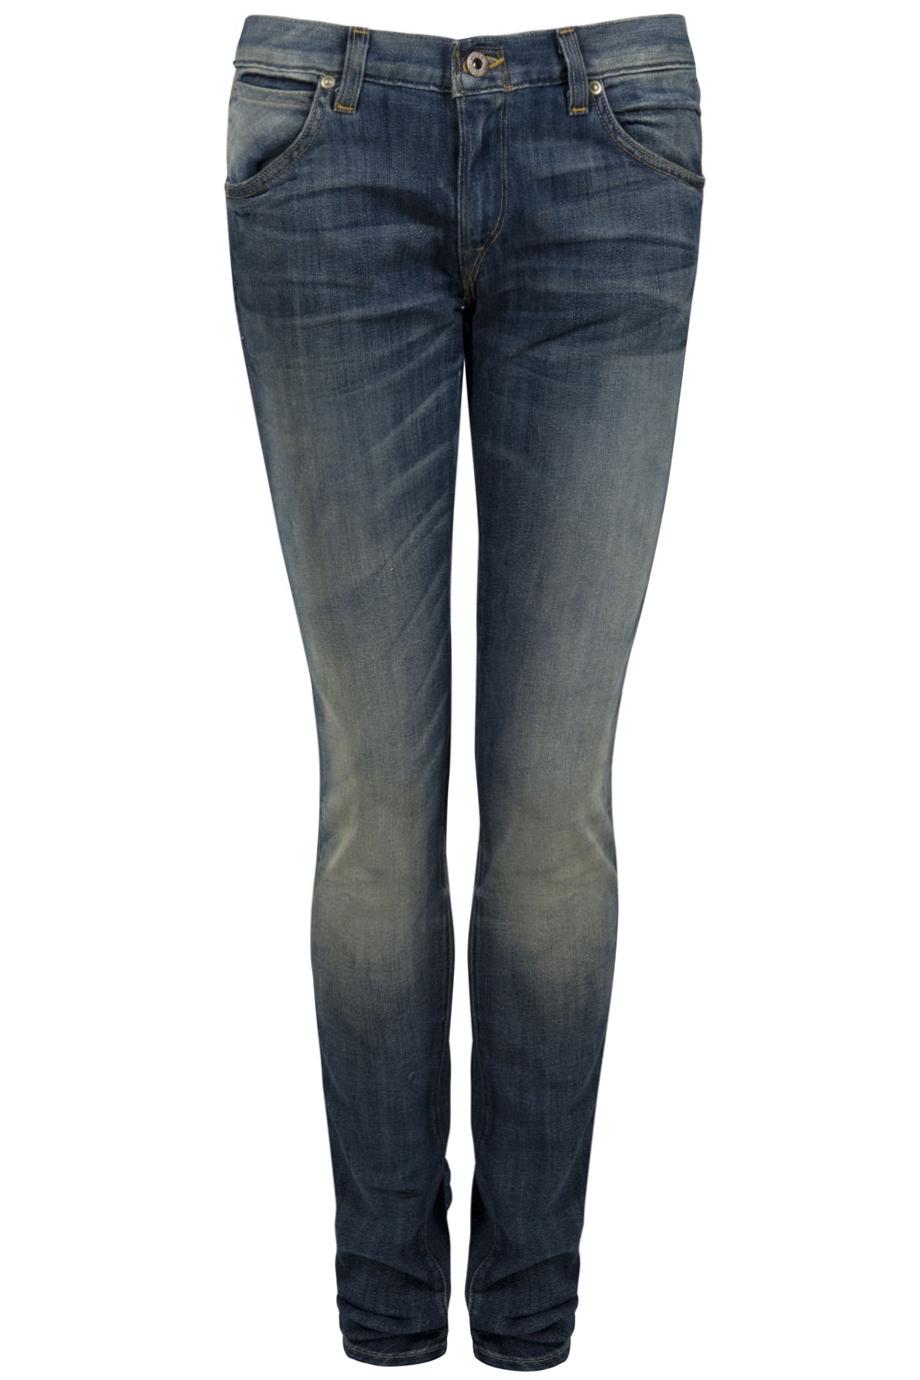 Lyst - Prps Vintage Skinny Jeans in Blue